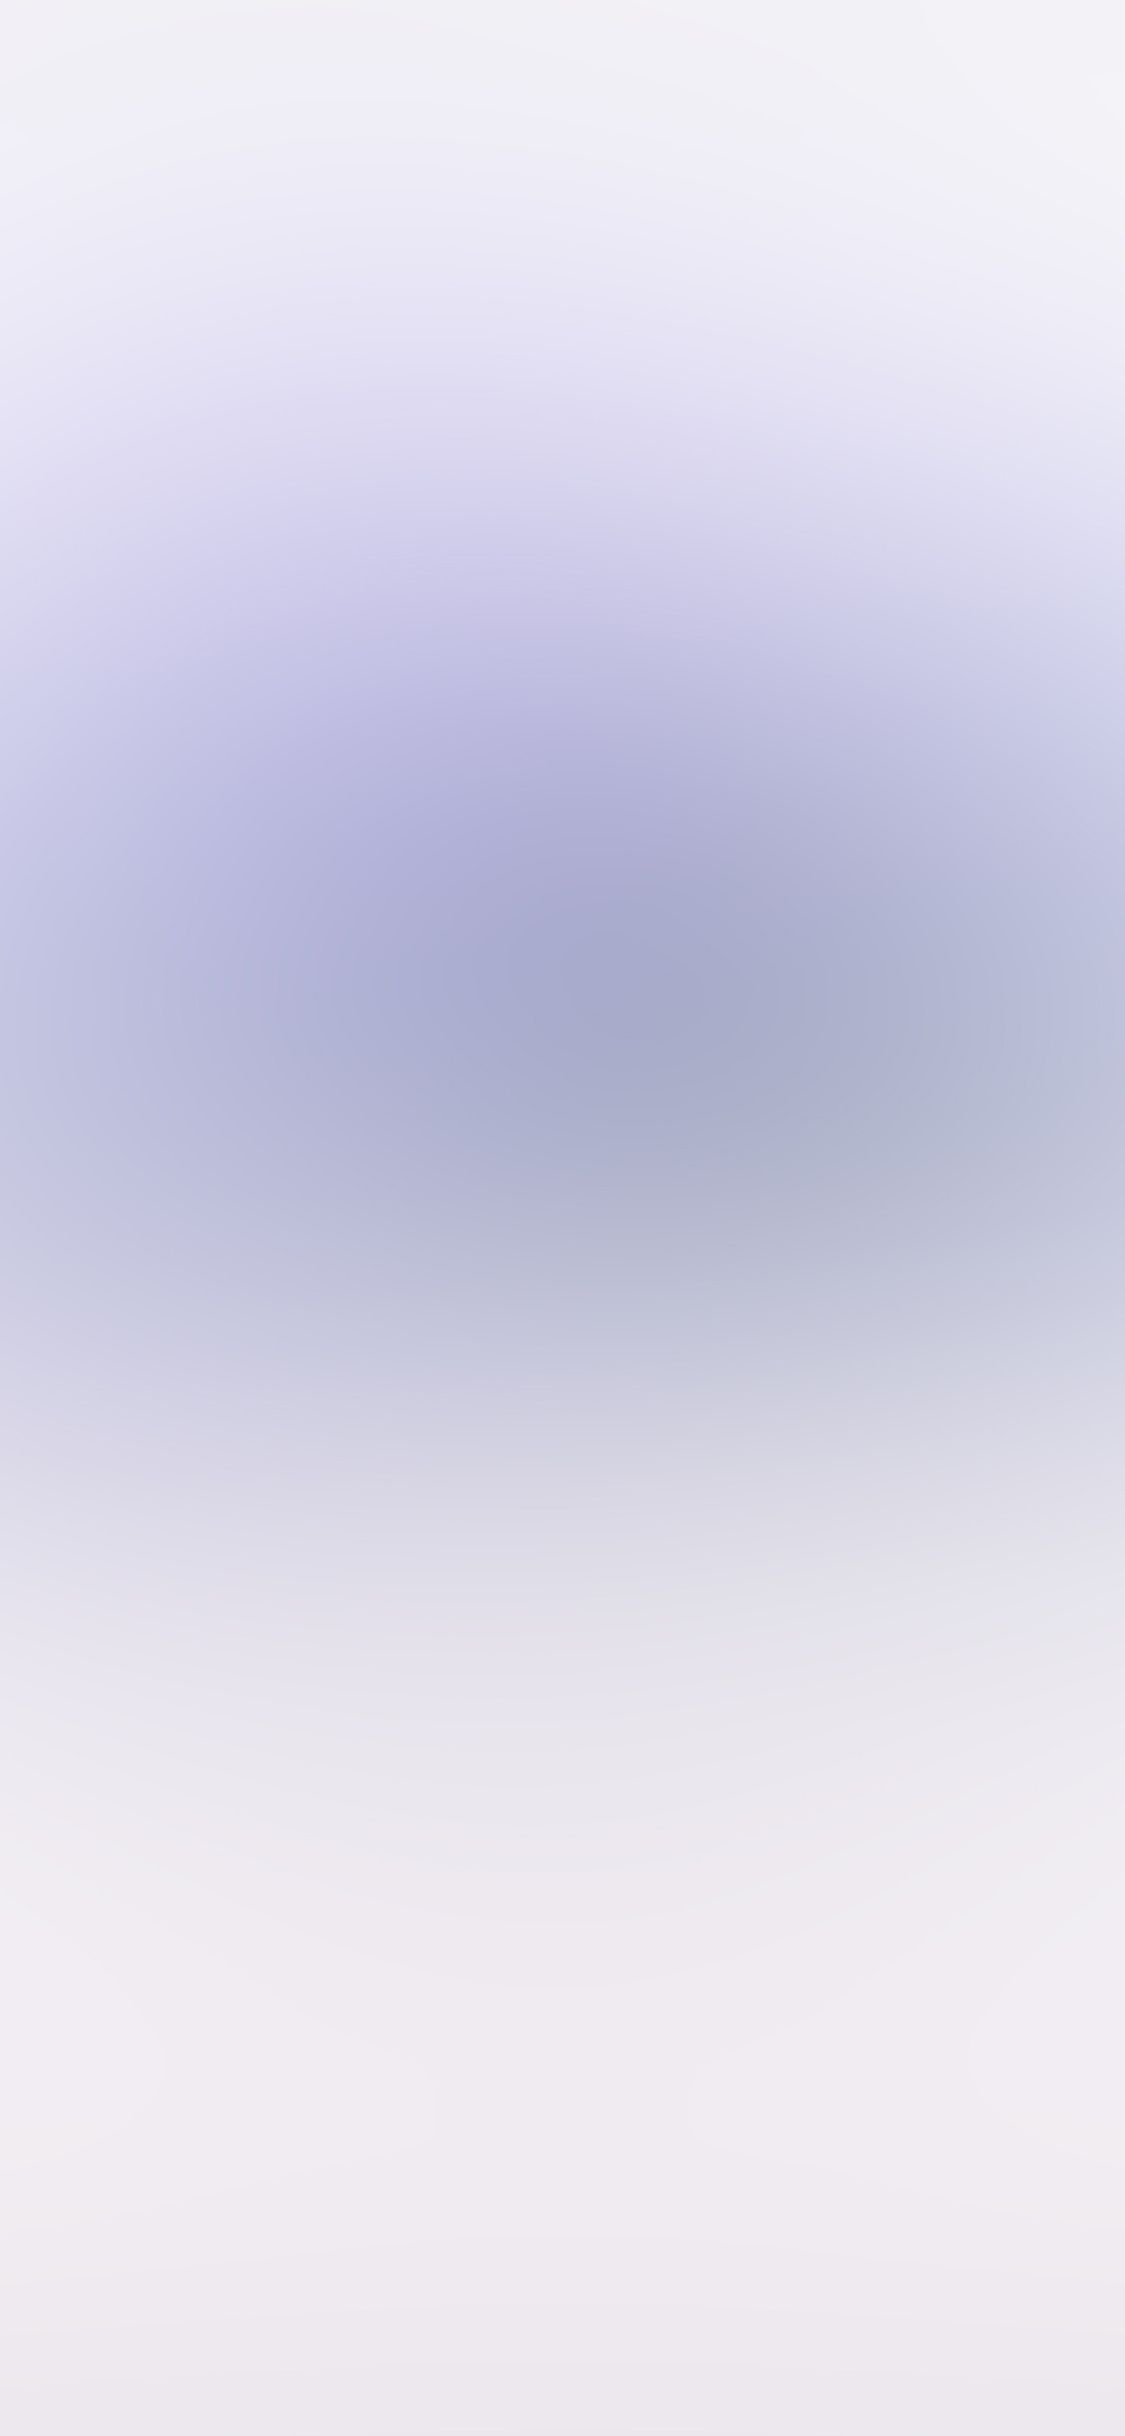 white gray blue soft pastel gradation blur